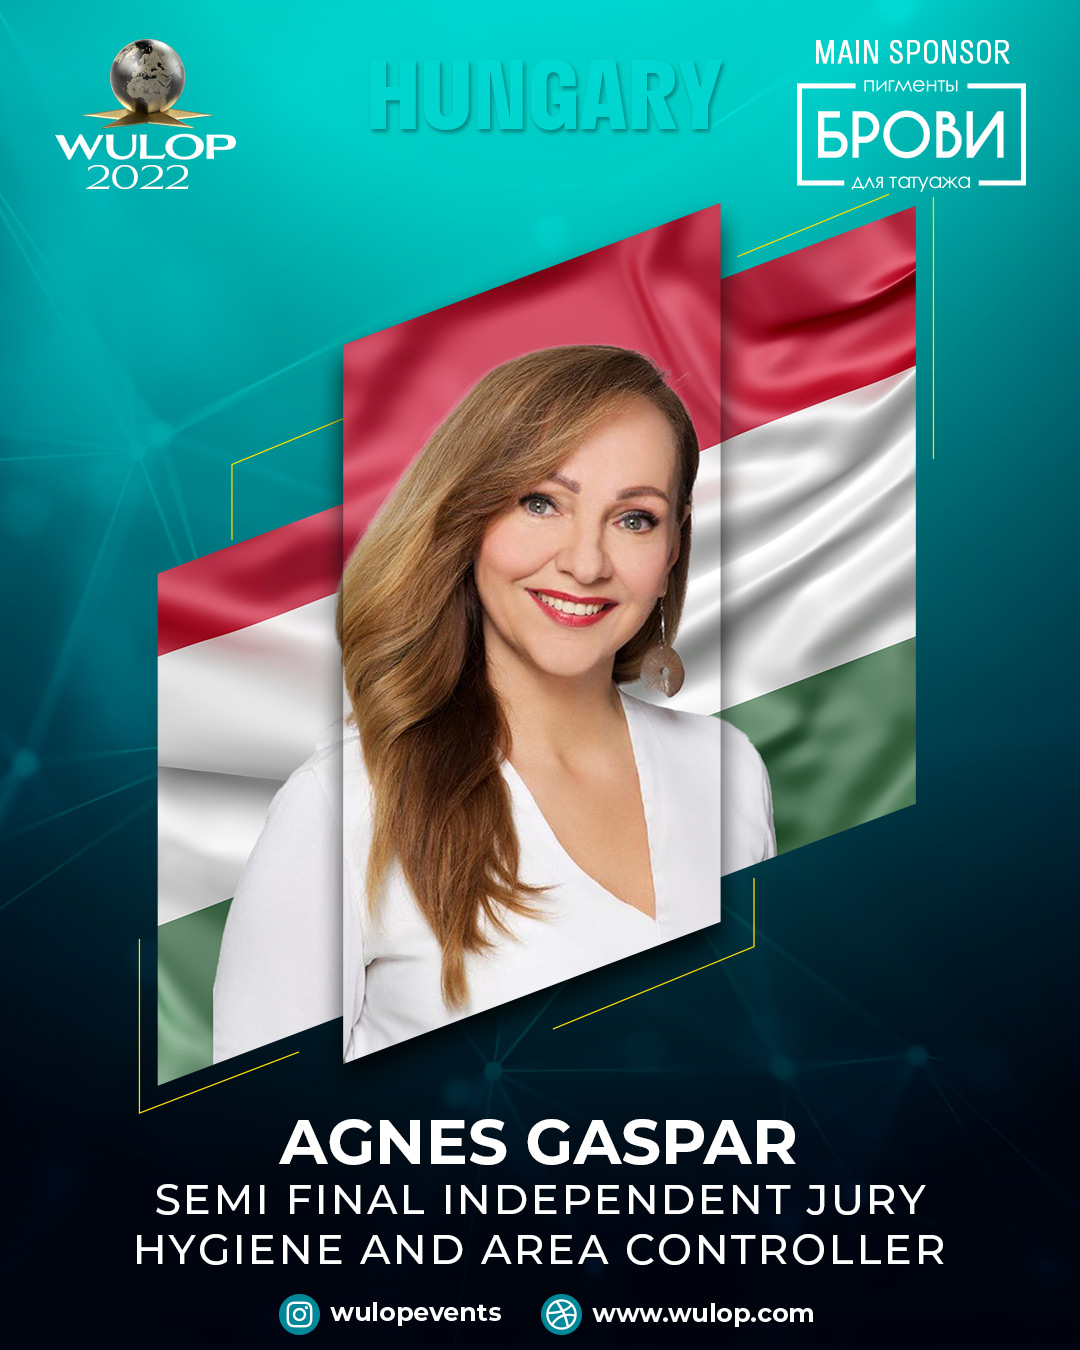 Agnes Gaspar